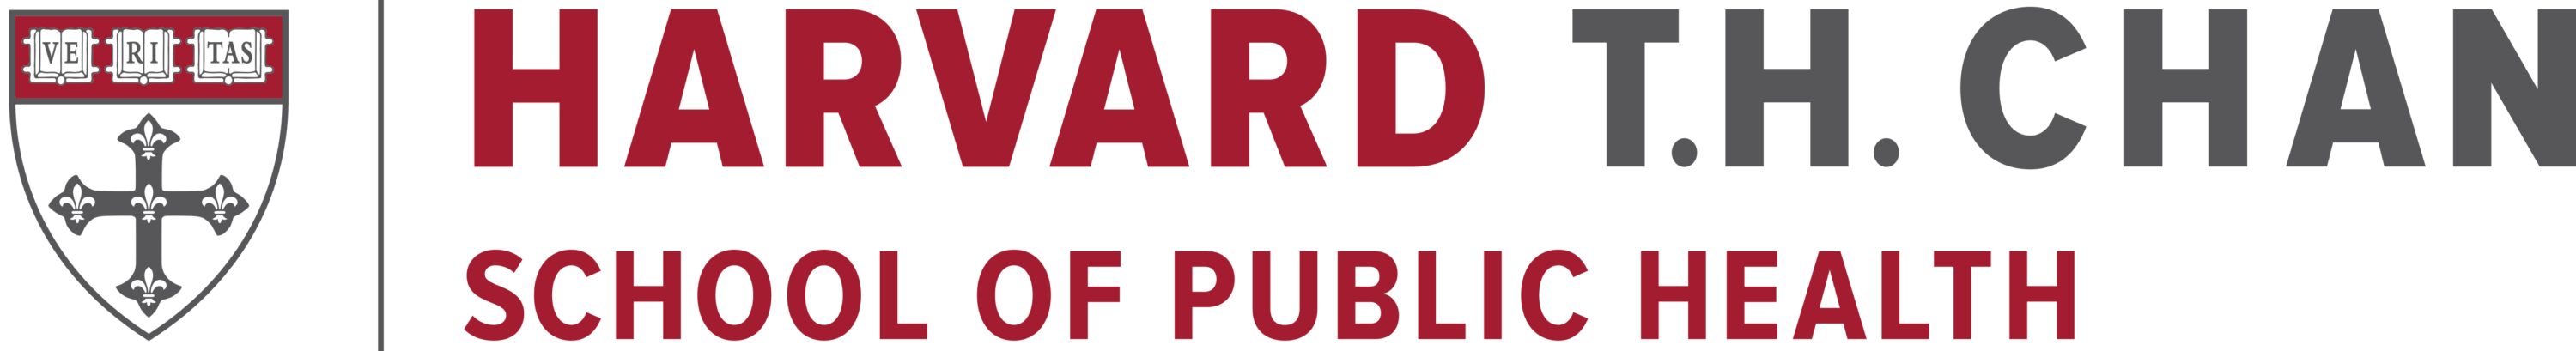 Harvard T.H. Chan School of Public Health Logo horizontal alternative